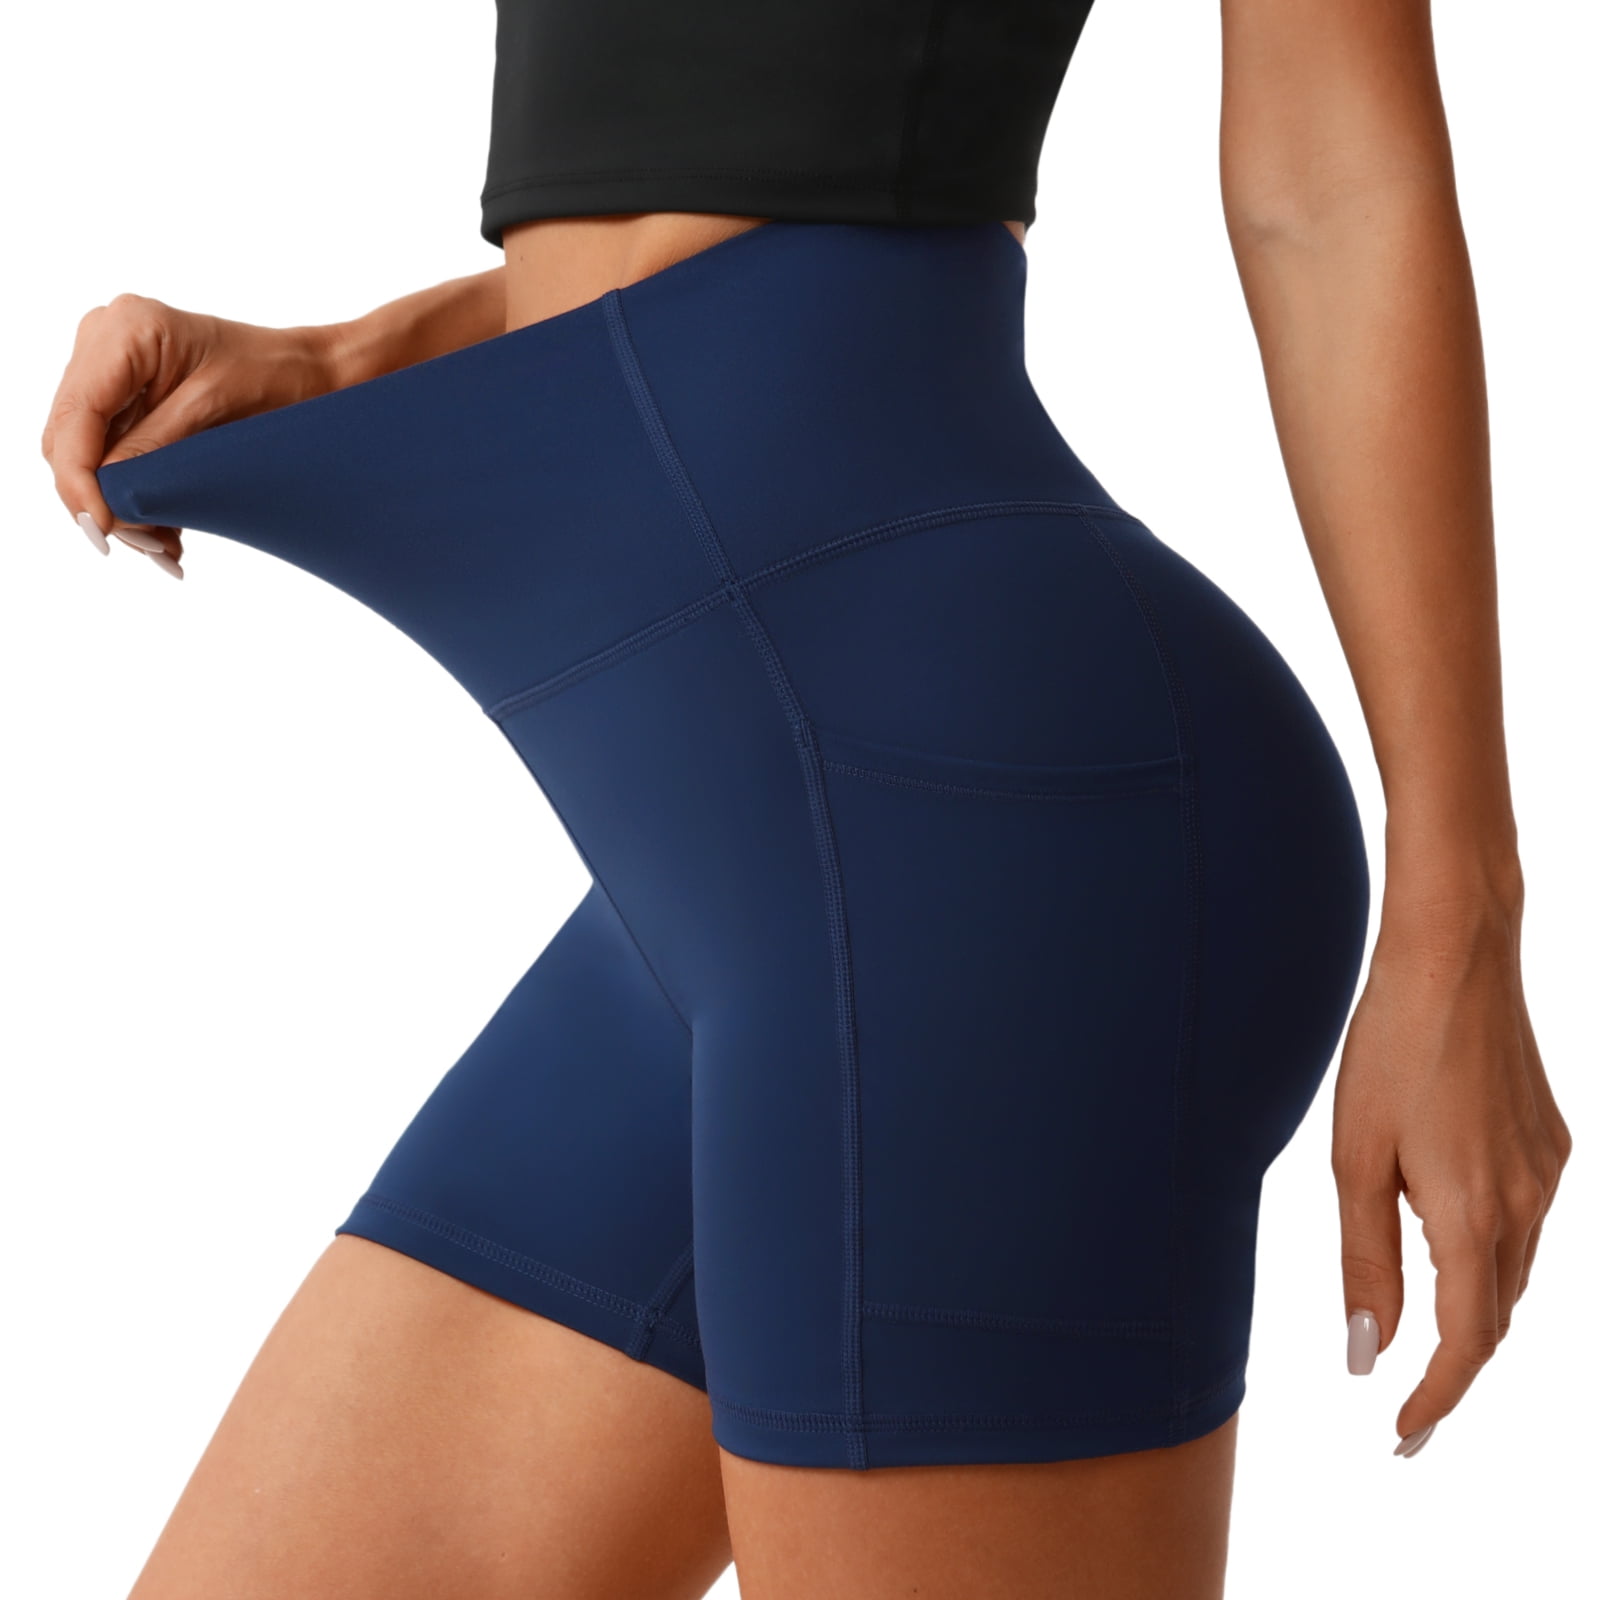 Women's High Waist Yoga Tummy Control Shorts, 5 Inch - Teal / S